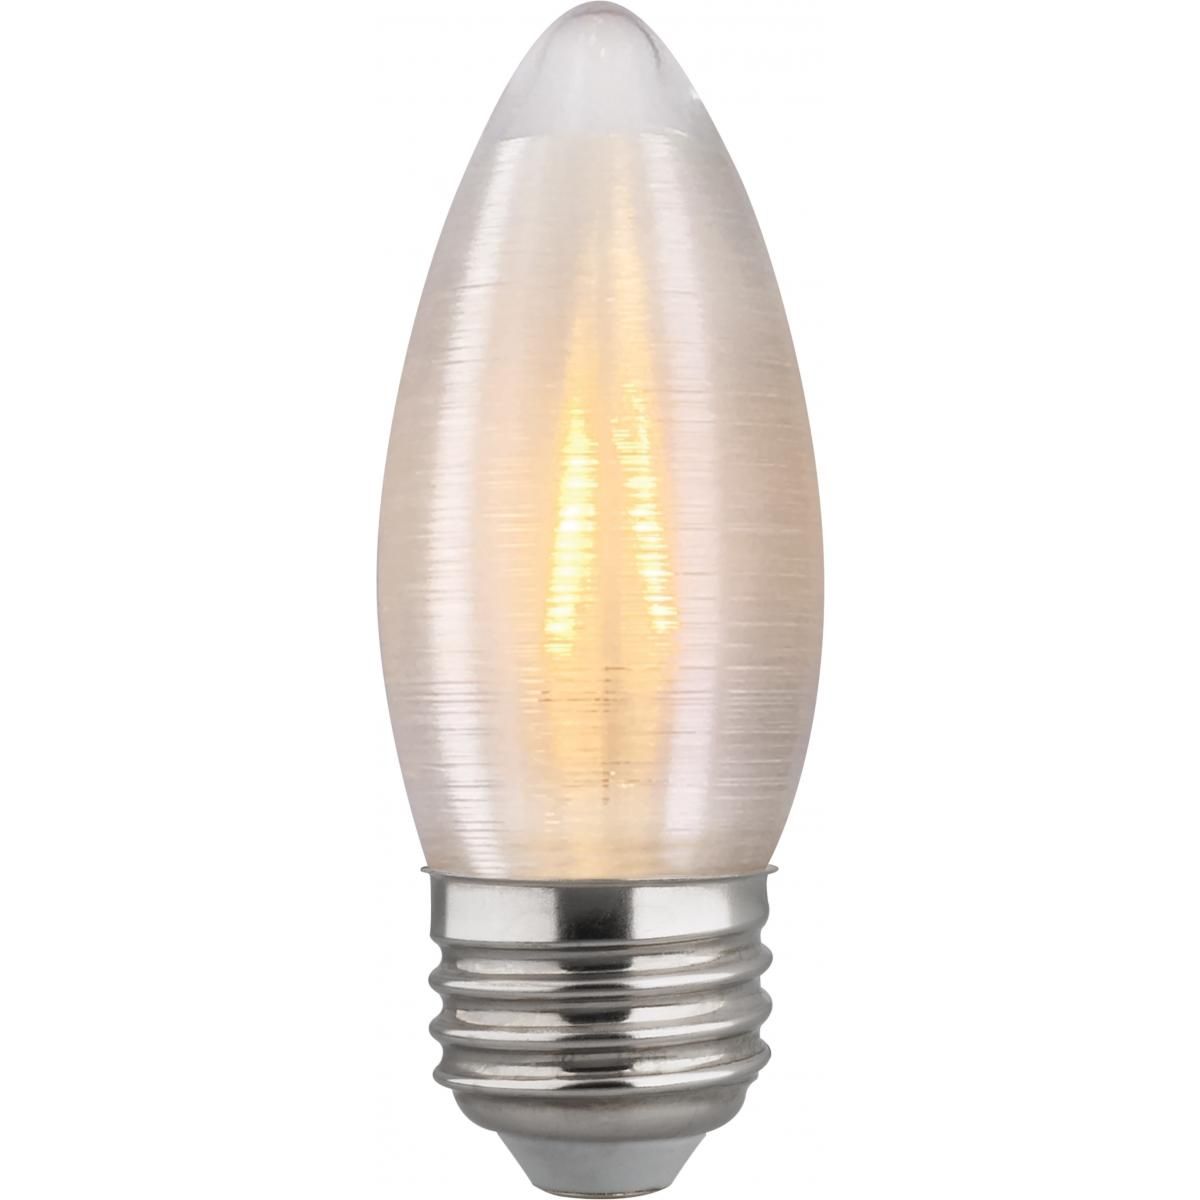 C11 Candle Filament LED Bulb, 2 Watt, 120 Lumens, 2700K, E26 Medium Base, Frosted Finish